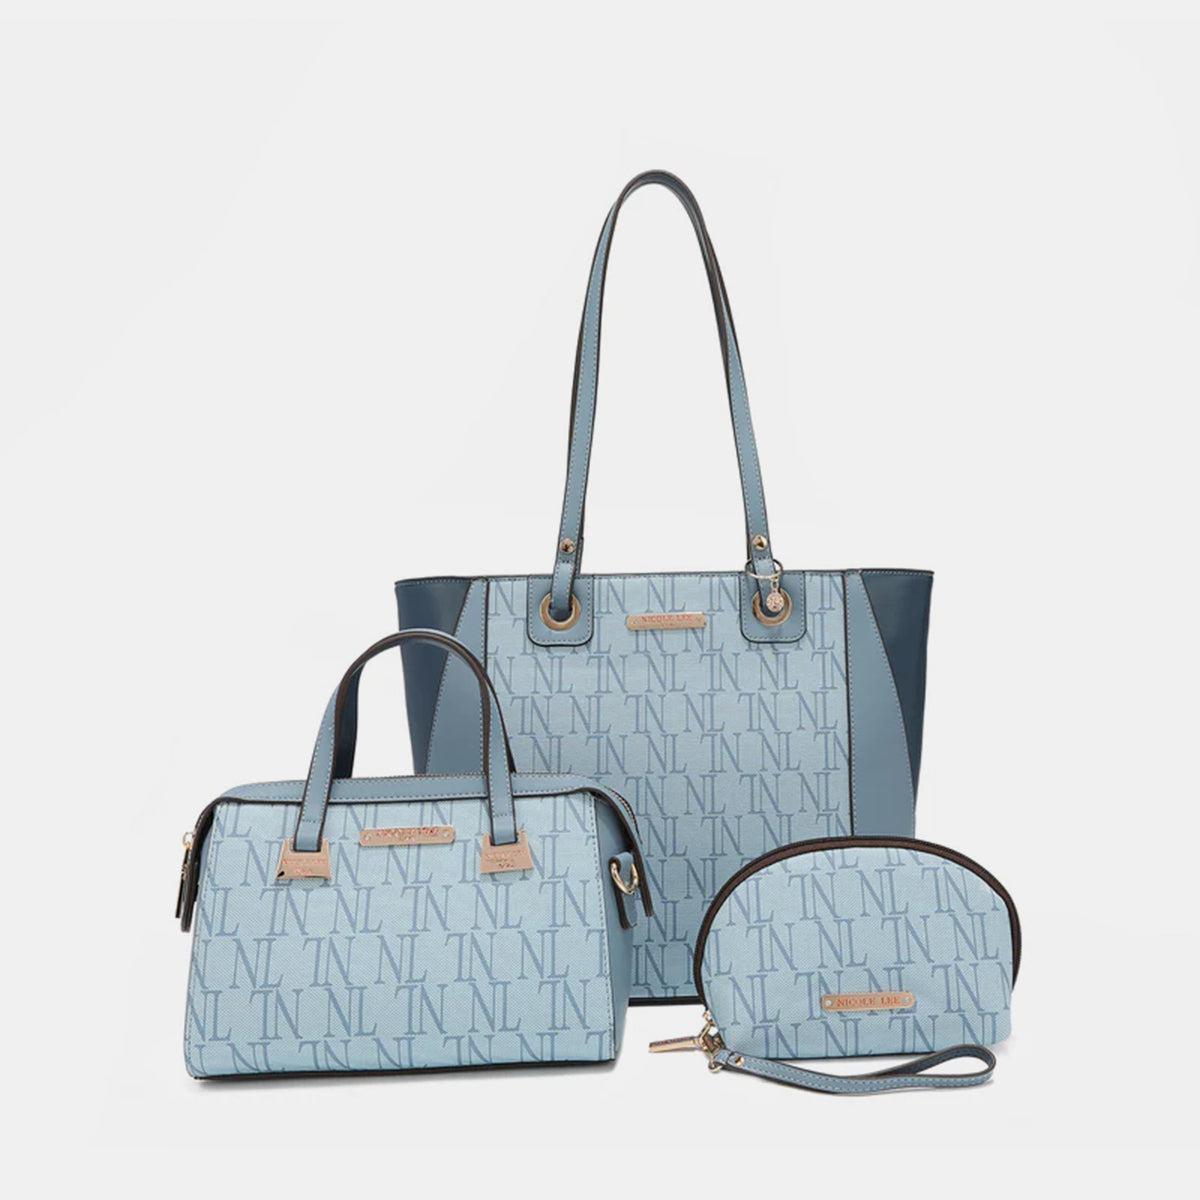 a set of three handbags and a purse